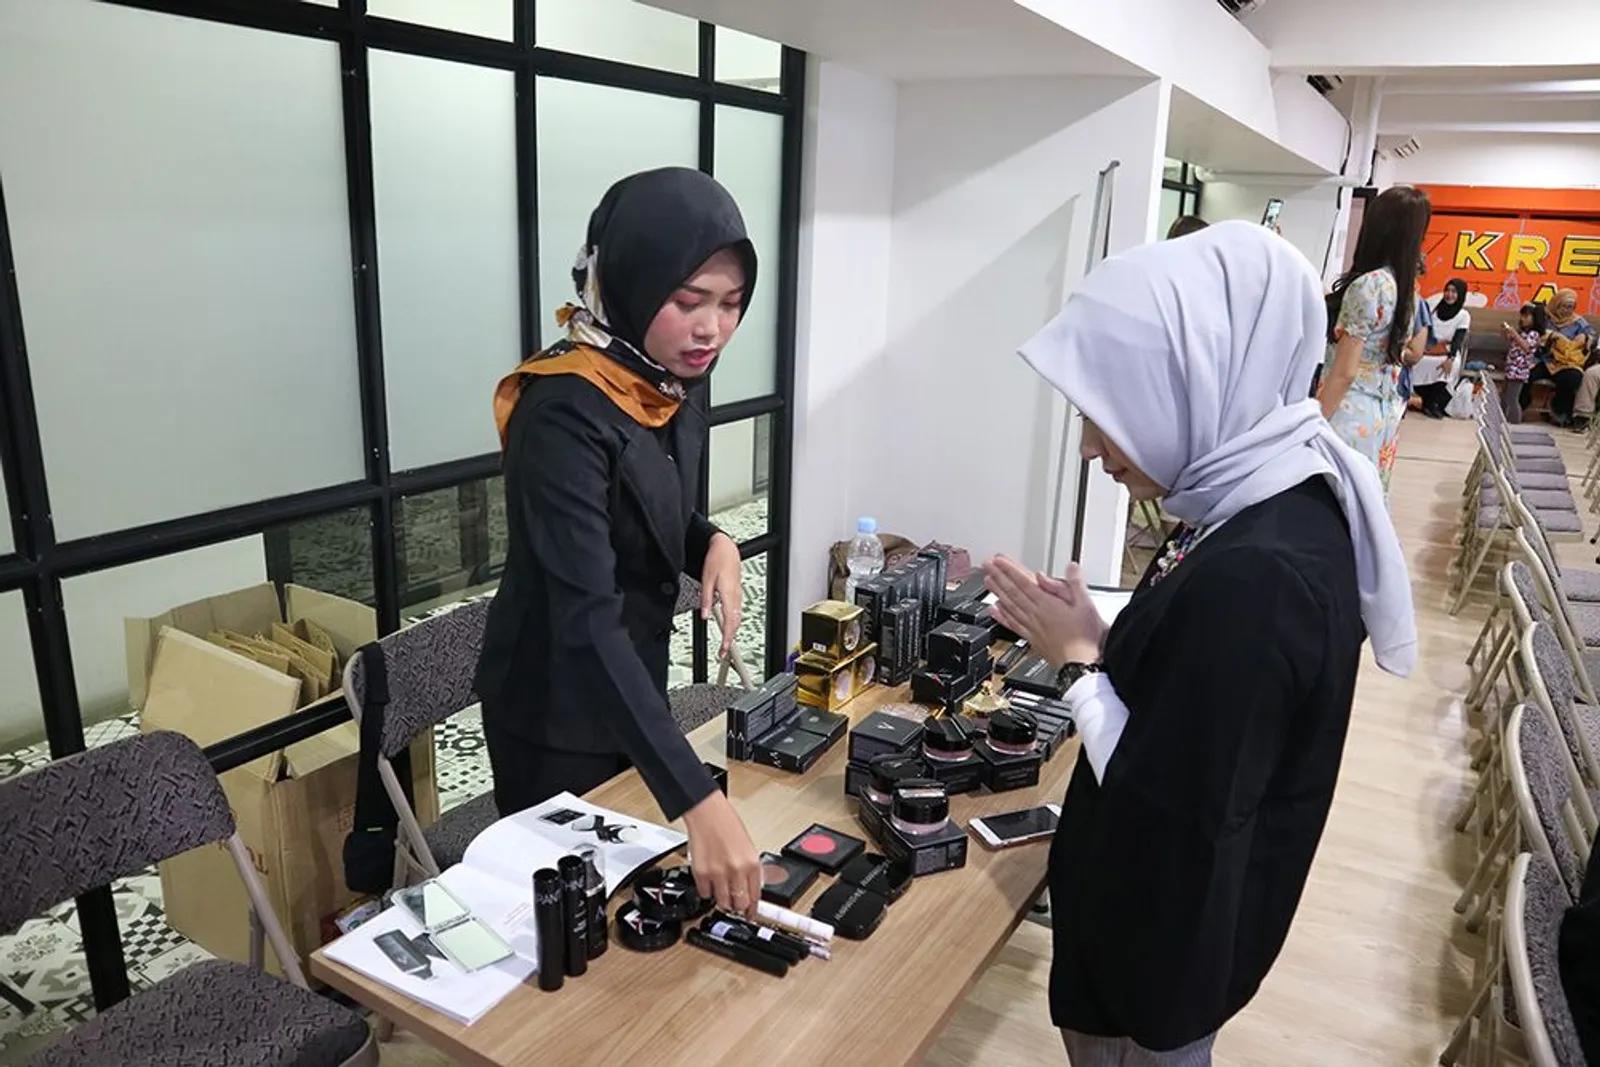 Intip Momen Berbagi Inspirasi Makeup Bersama Popbela Community Jakarta